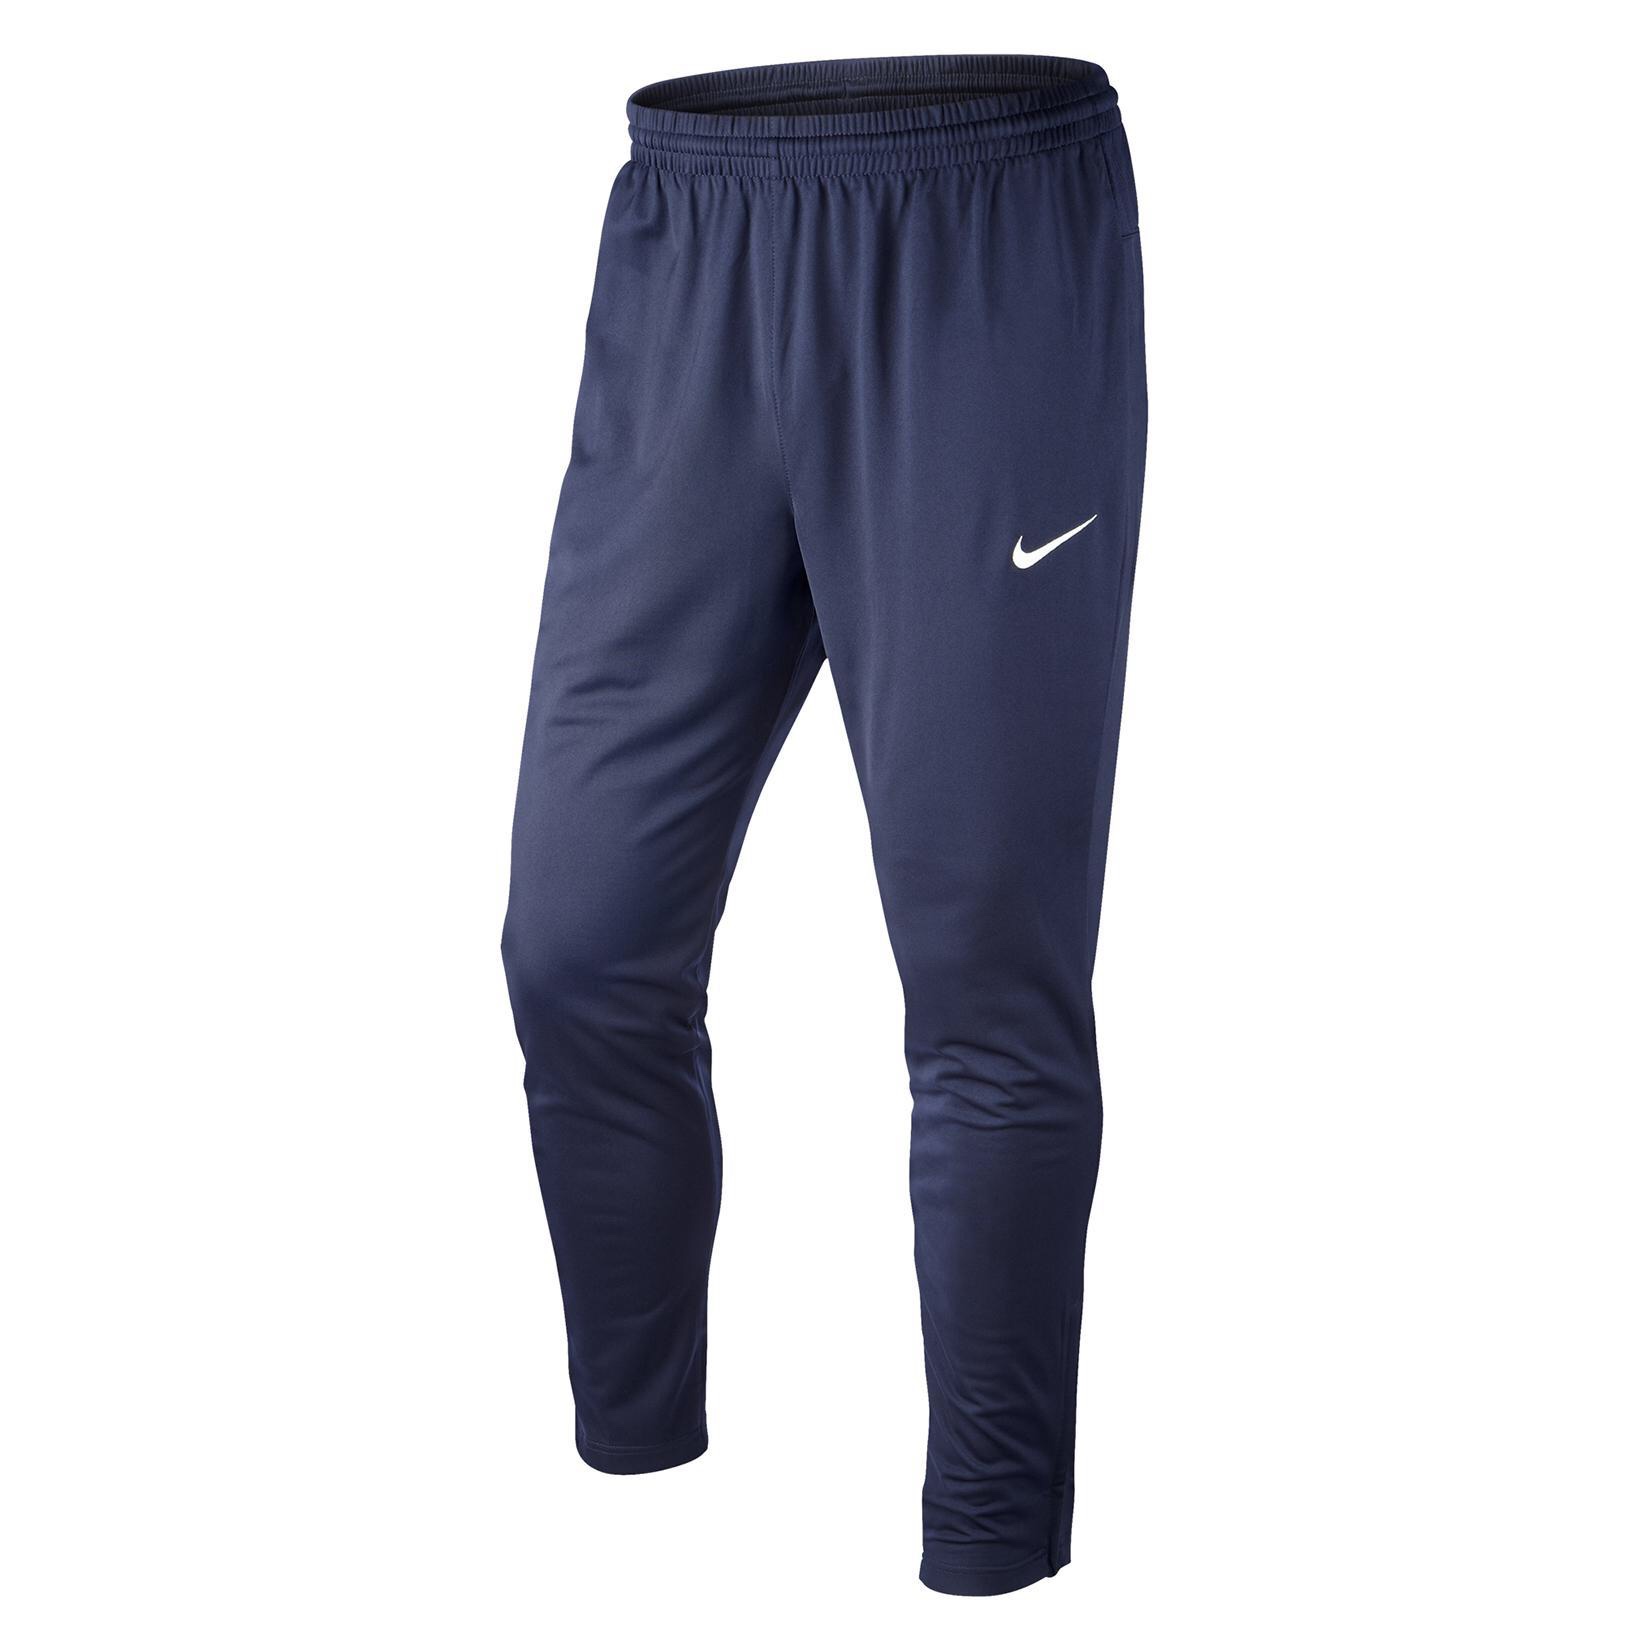 Nike Libero Tech Knit Pant - The Football Factory